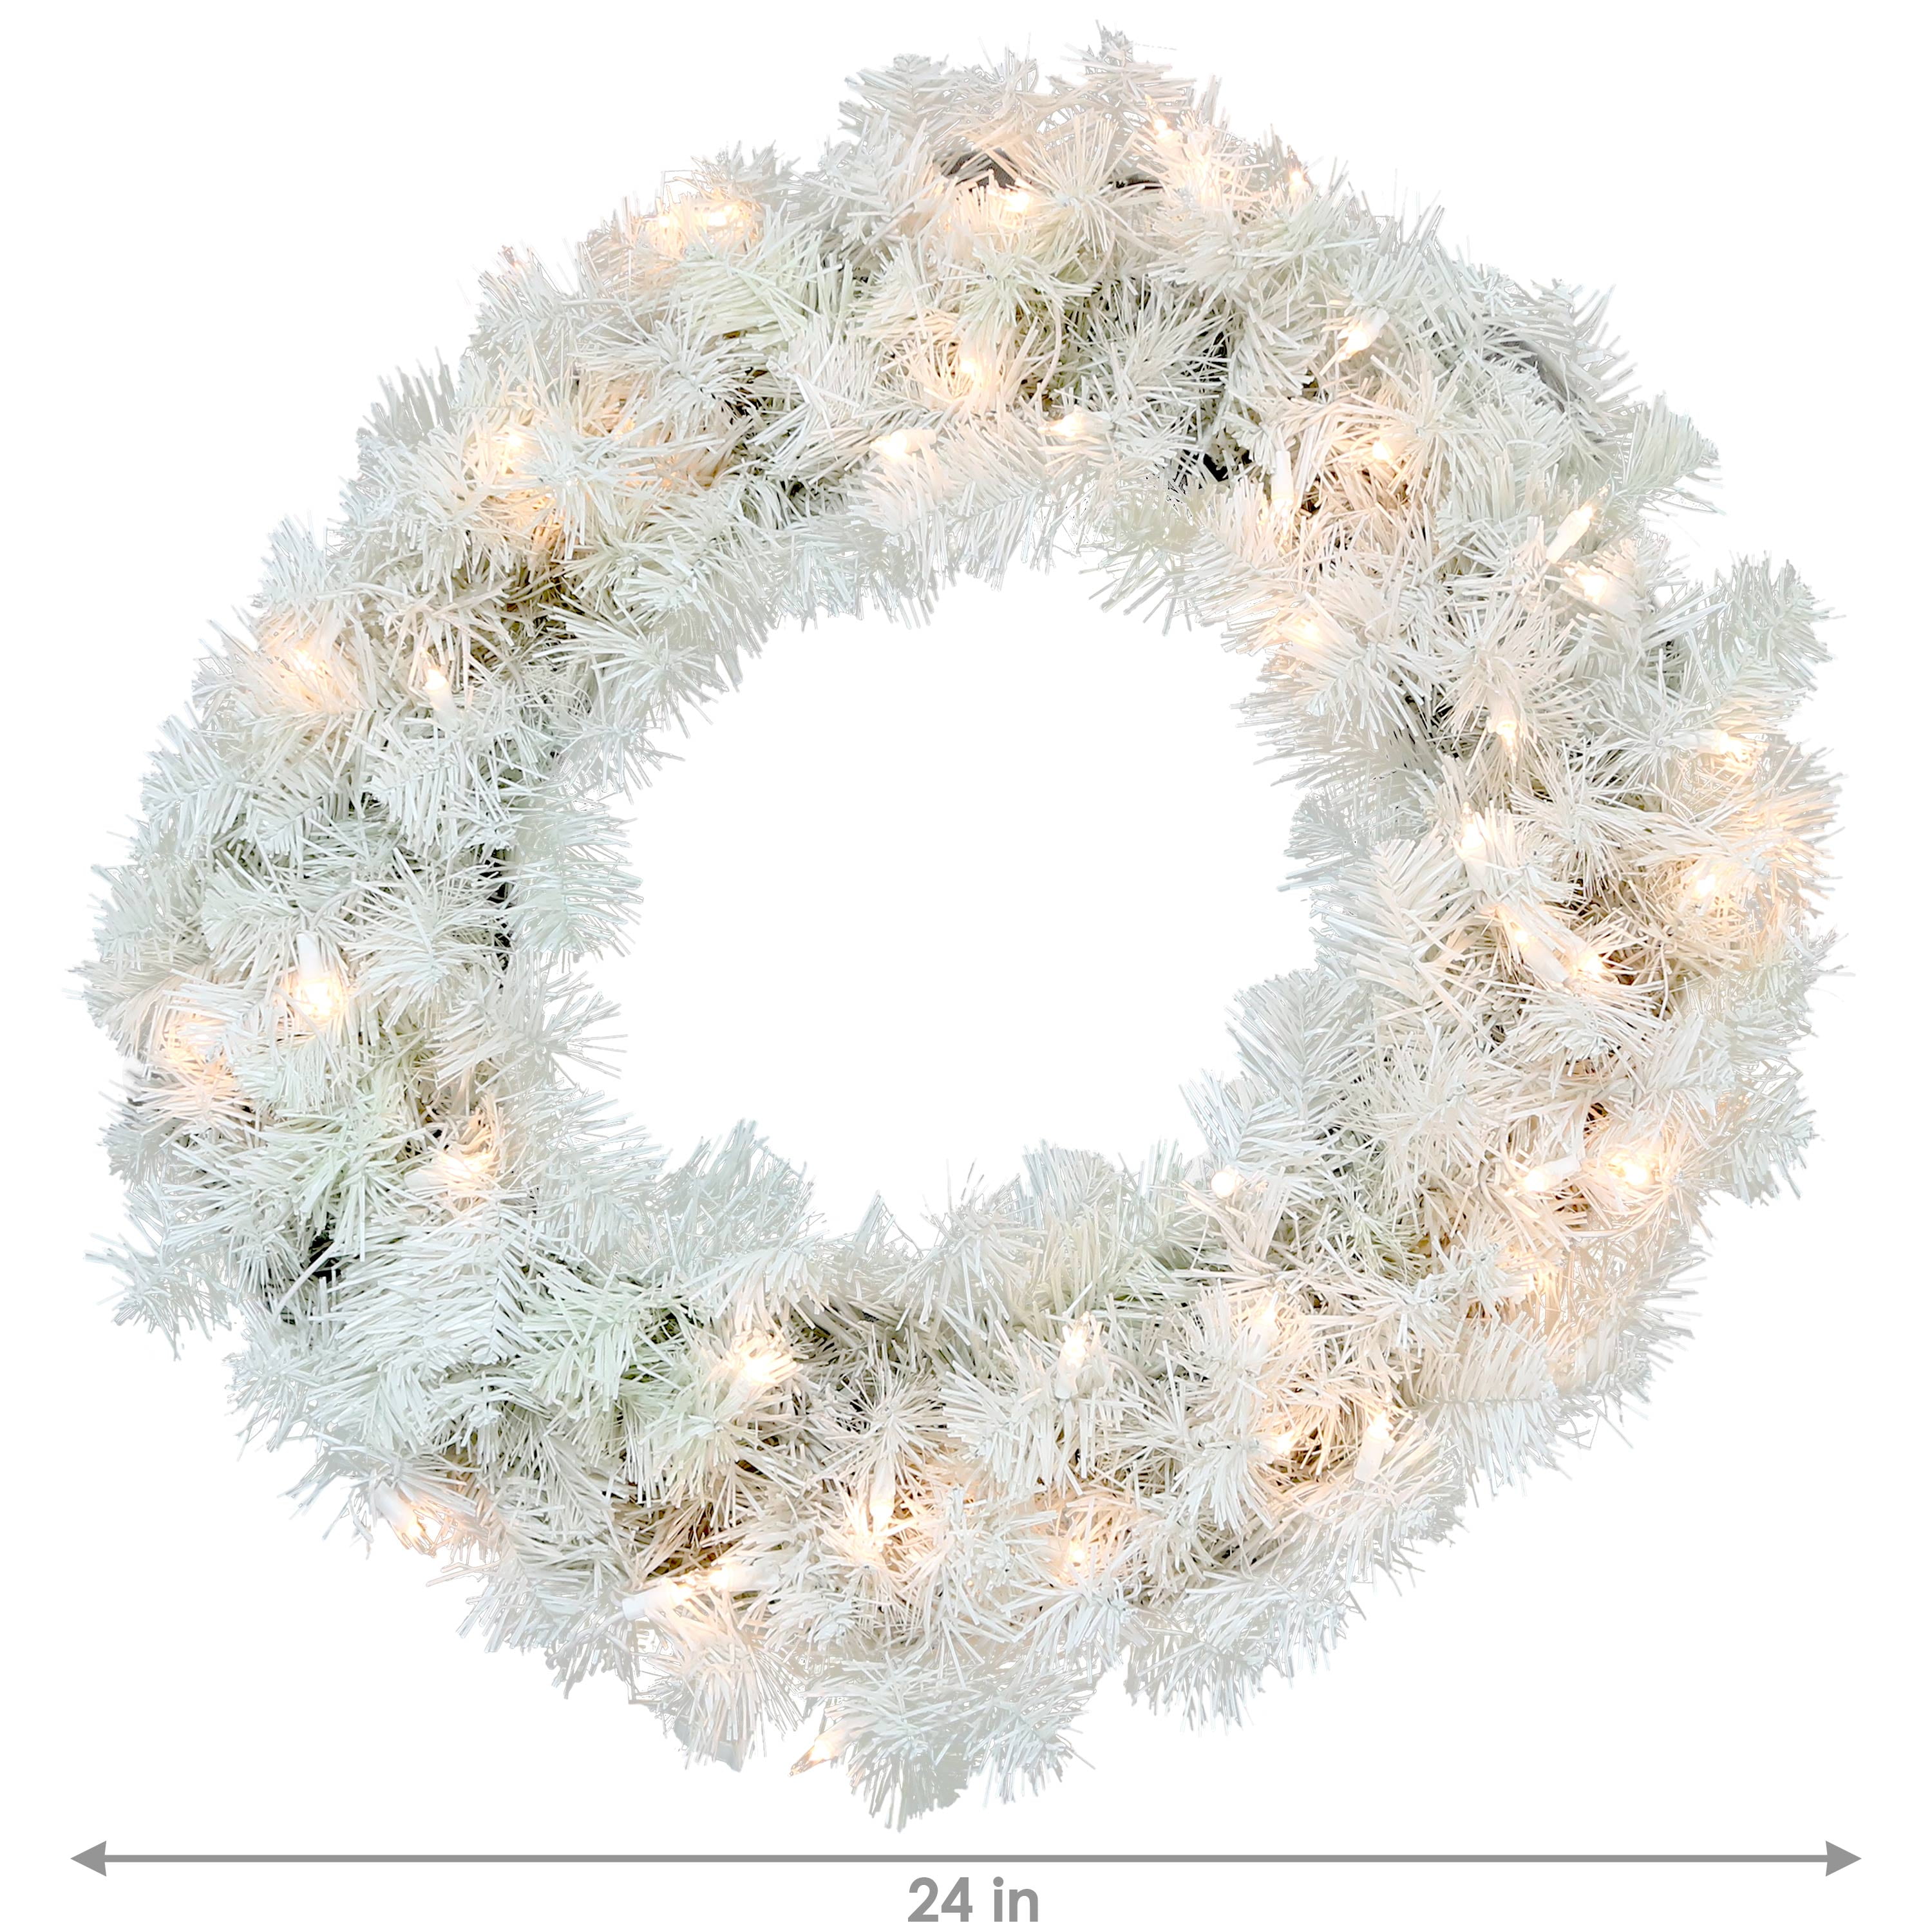 Sunnydaze White Christmas Wreath with Warm White LED Lights - 24 Inches -  Walmart.com - Walmart.com